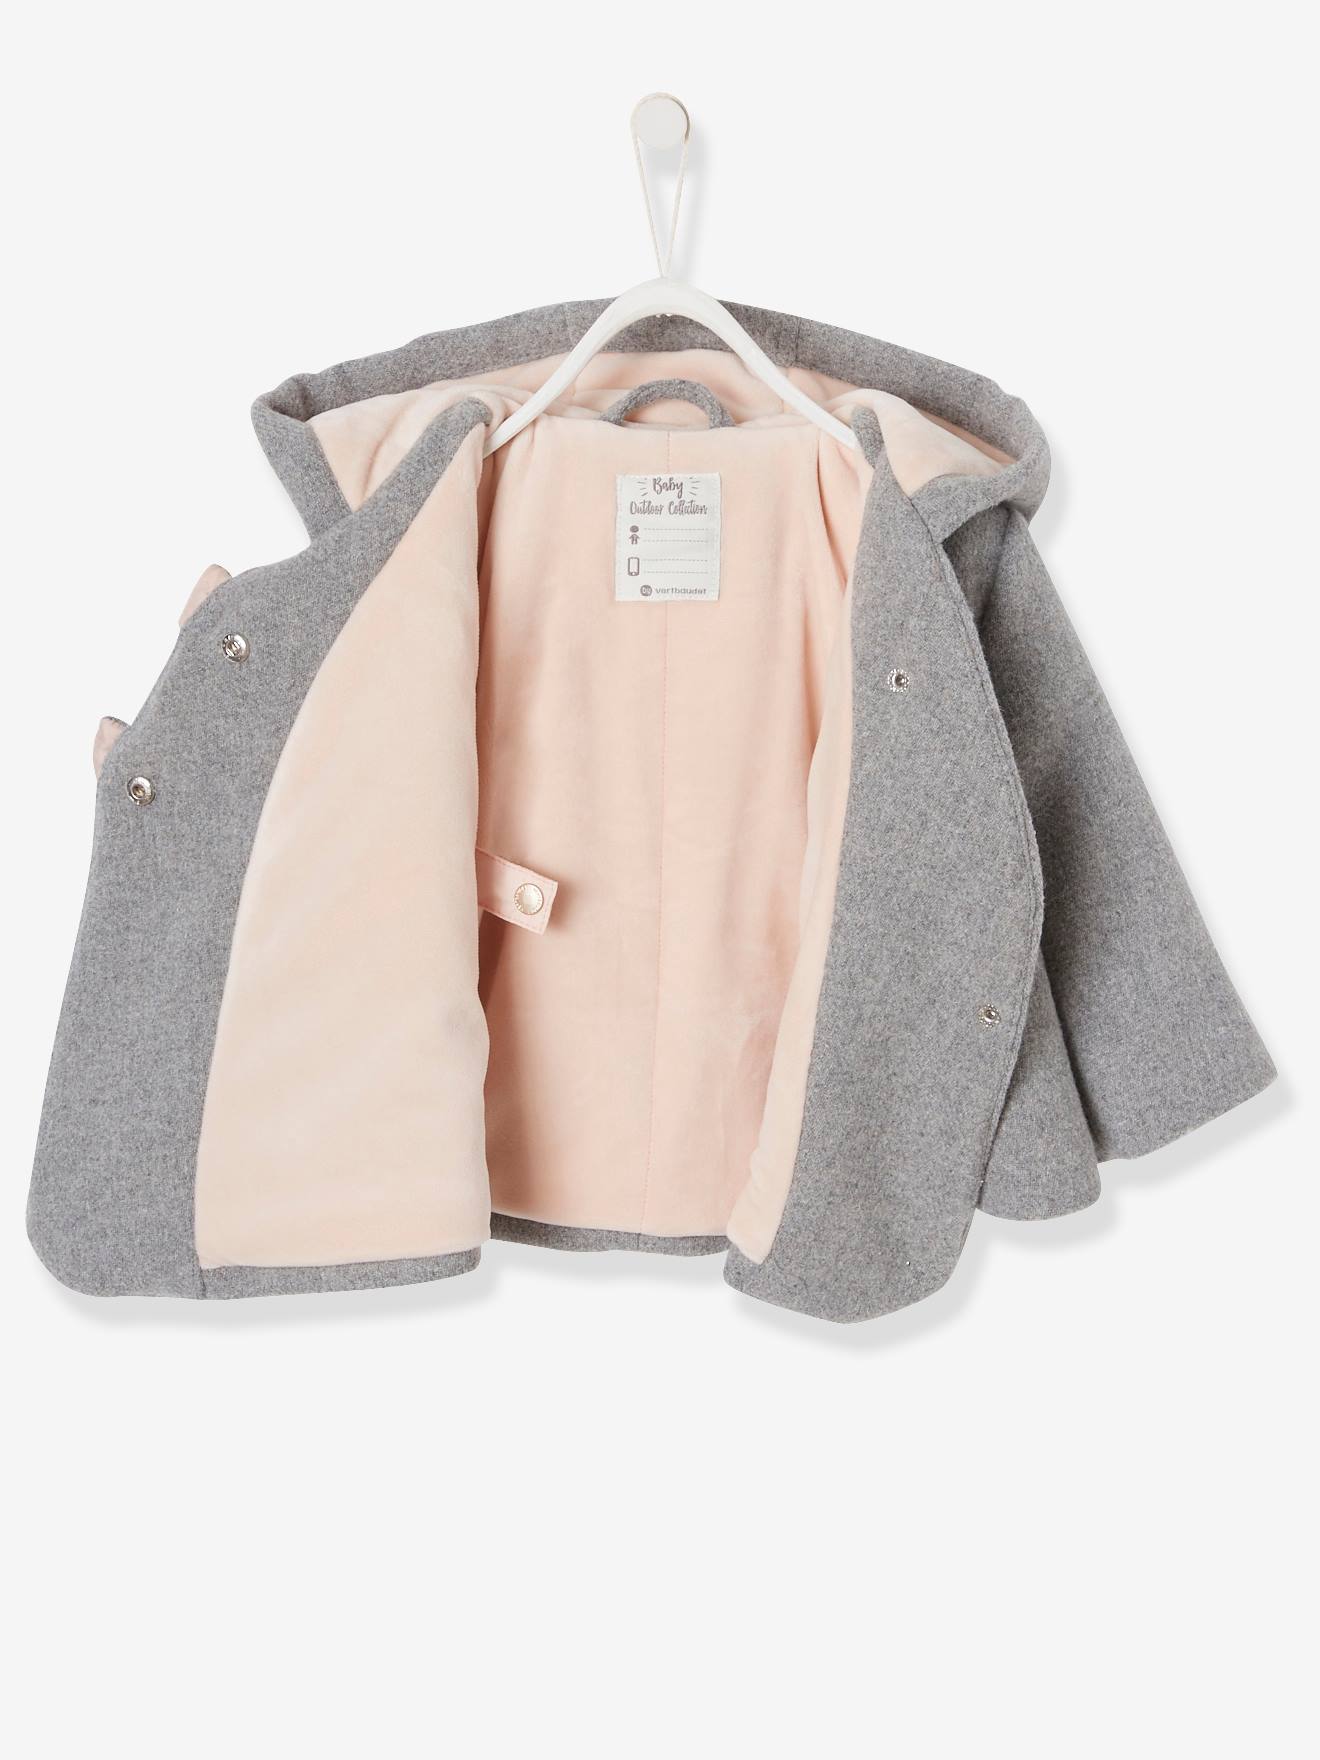 Abrigo con capucha bebé niña paño de lana y guateado gris claro jaspeado Vertbaudet